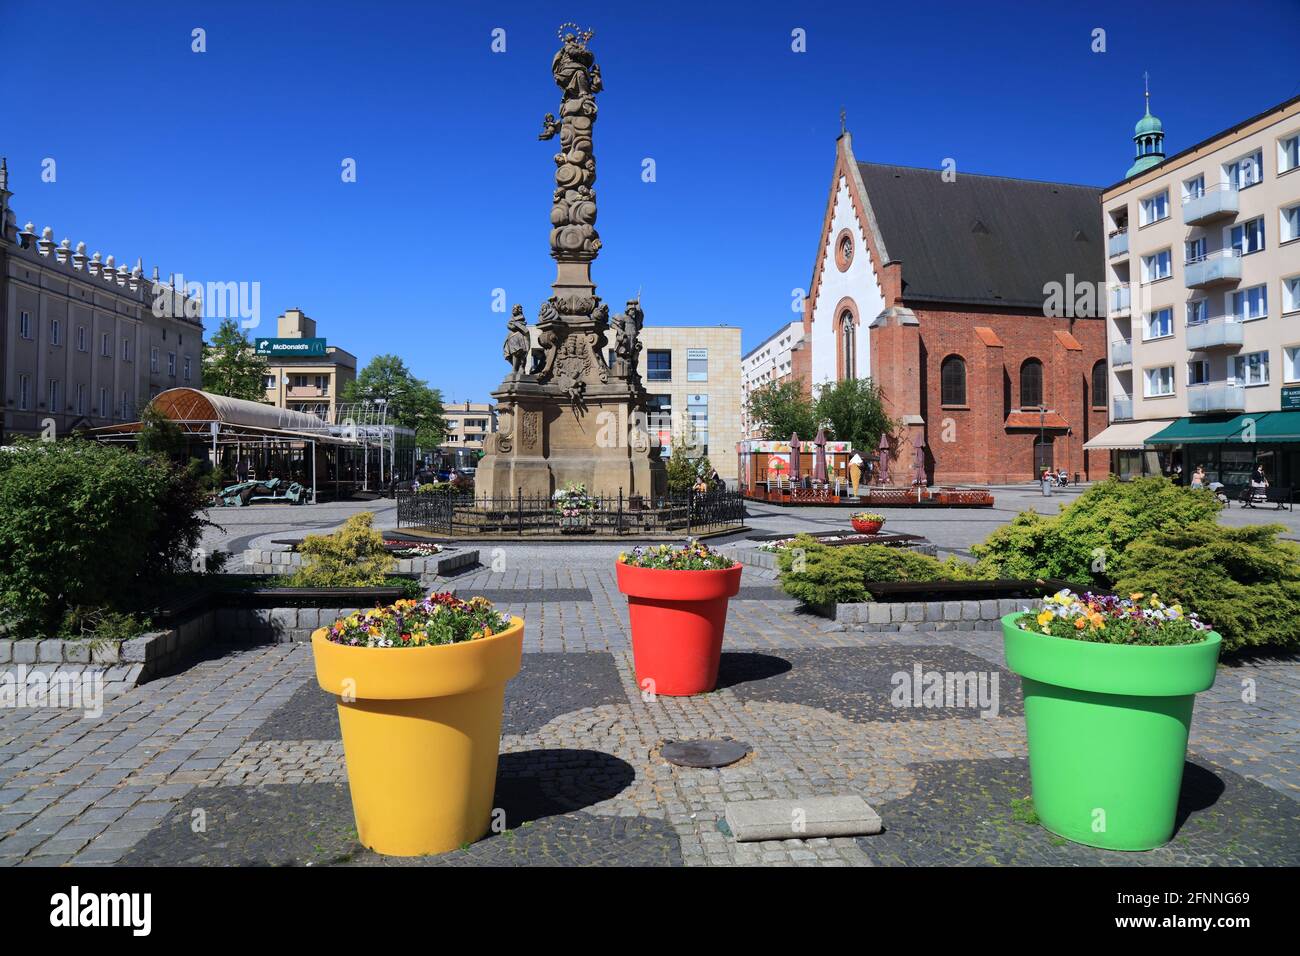 RACIBORZ, POLAND - MAY 11, 2021: Main square (Rynek) of Raciborz city, Poland. Raciborz is an important city in Southern Poland with 54,000 inhabitant Stock Photo